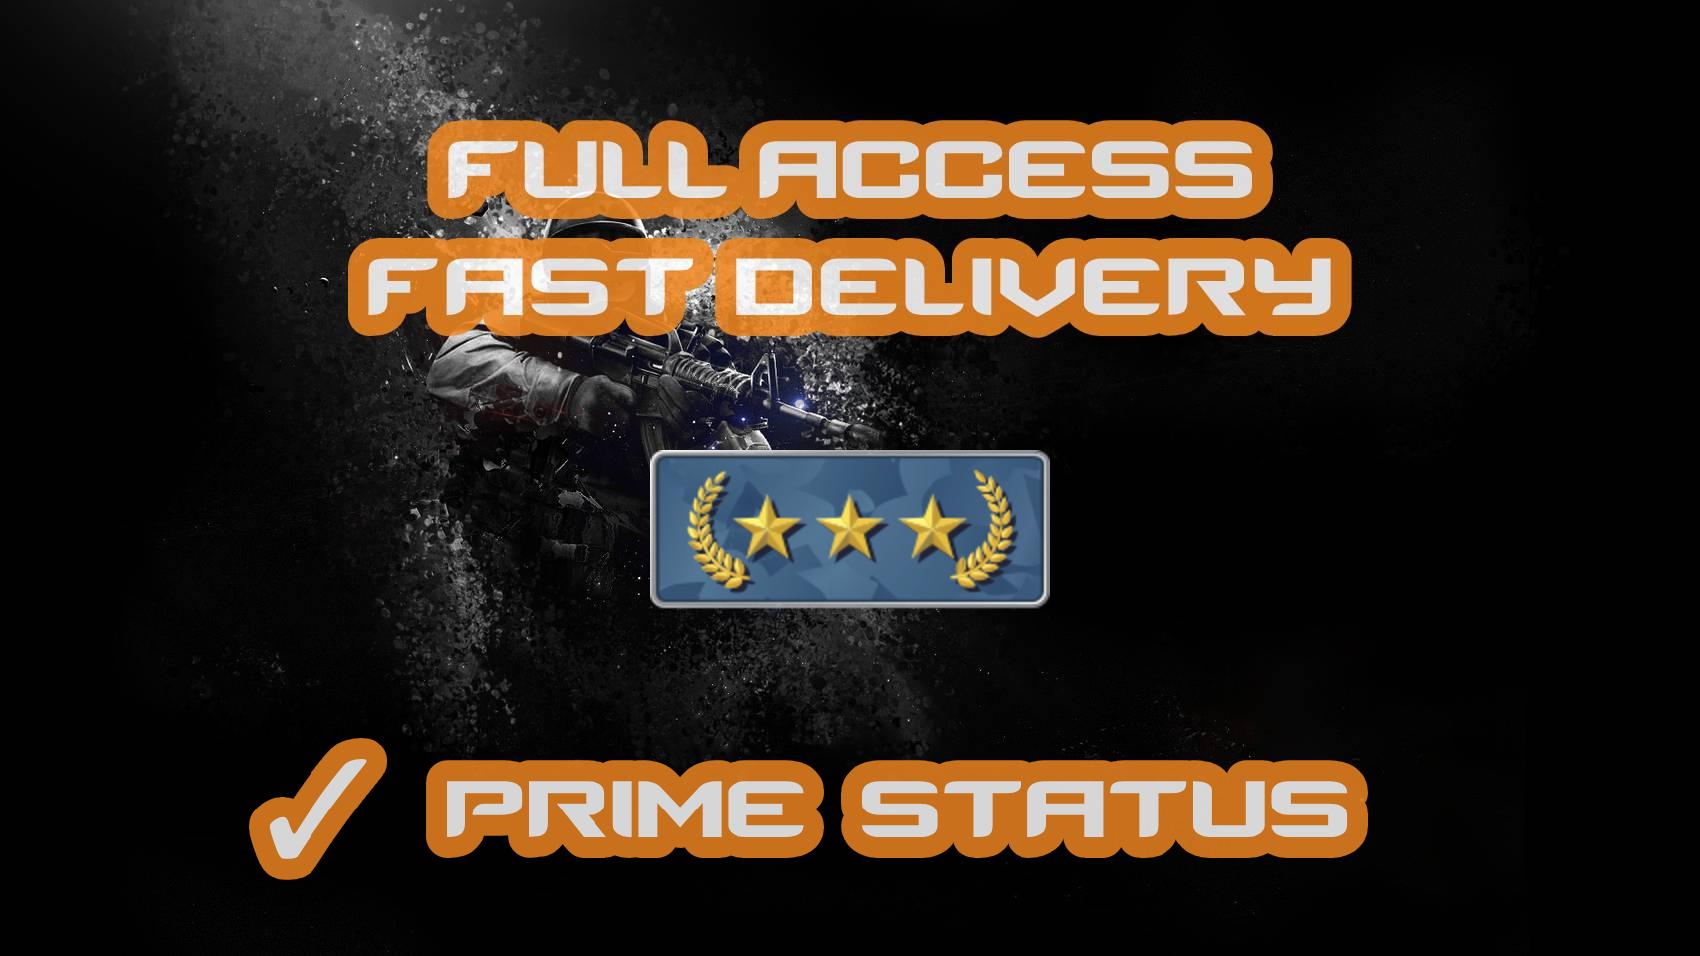 【Steam】CS:GO Prime Status Upgrade I GOLD NOVA I Many Hours Played I Add Friends | Full Access